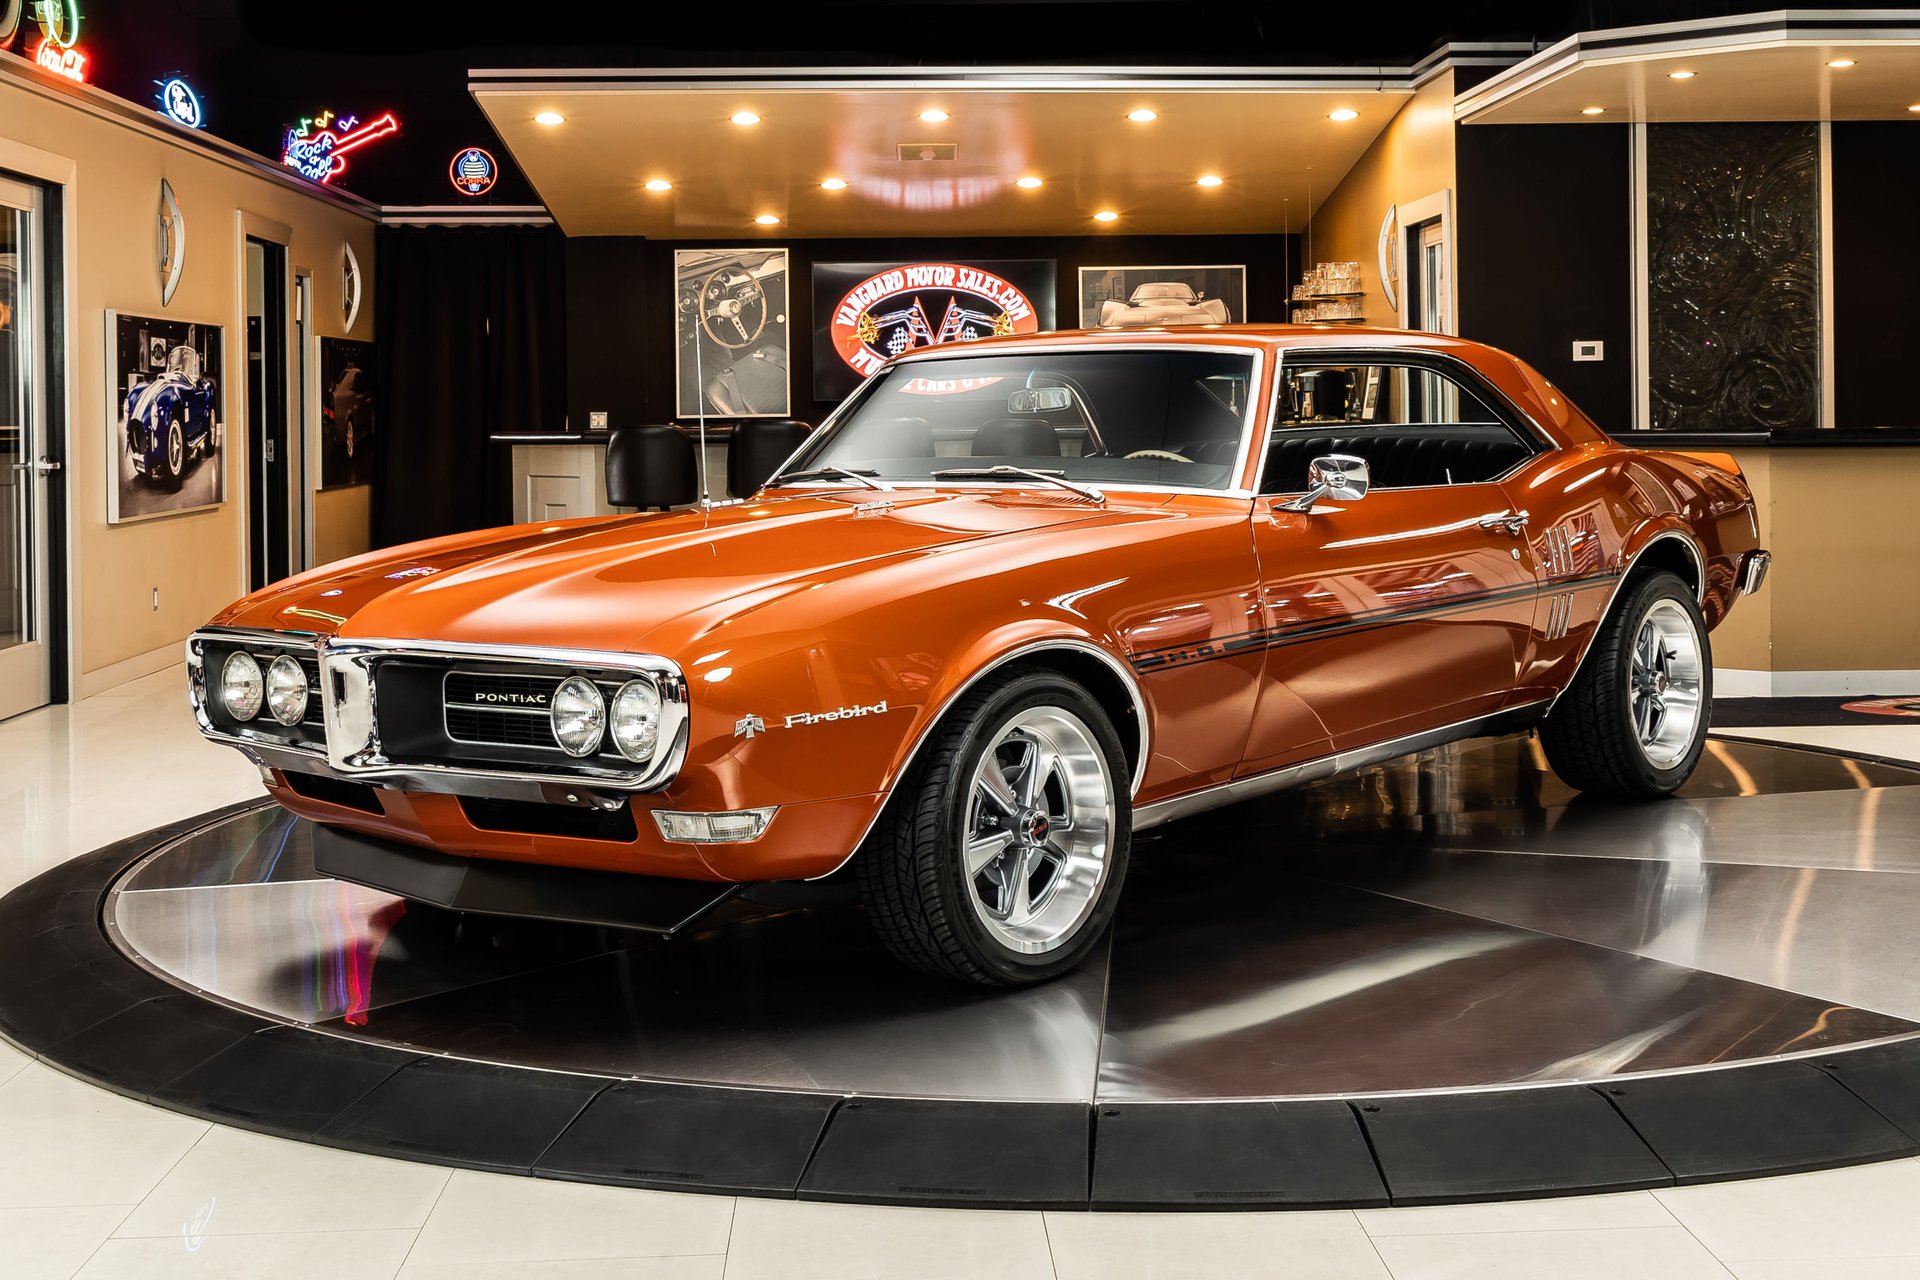 1968 Pontiac Firebird | Classic Cars for Sale Michigan: Muscle & Old Cars |  Vanguard Motor Sales